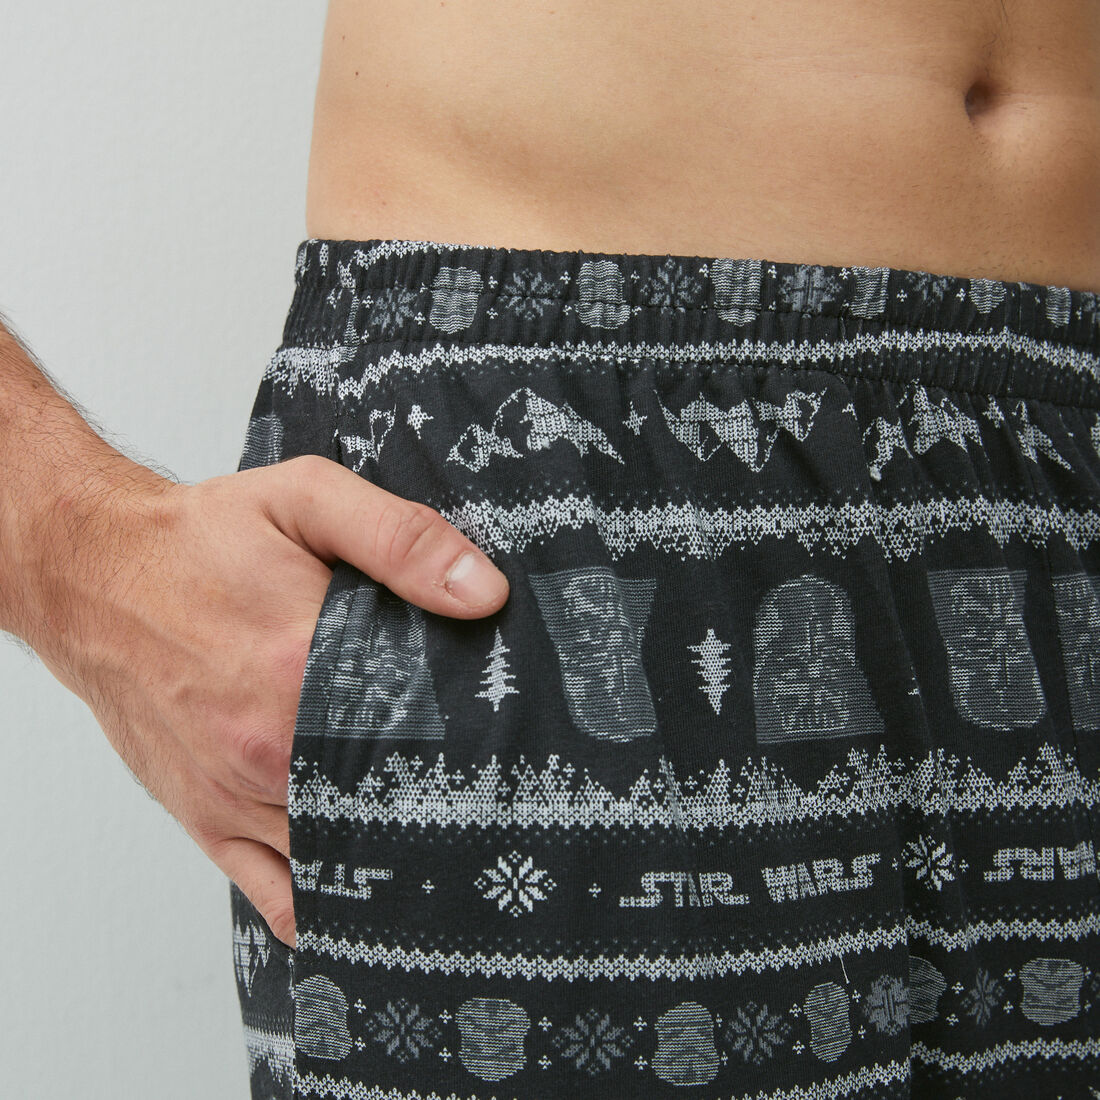 star wars jacquard print pyjama bottoms;